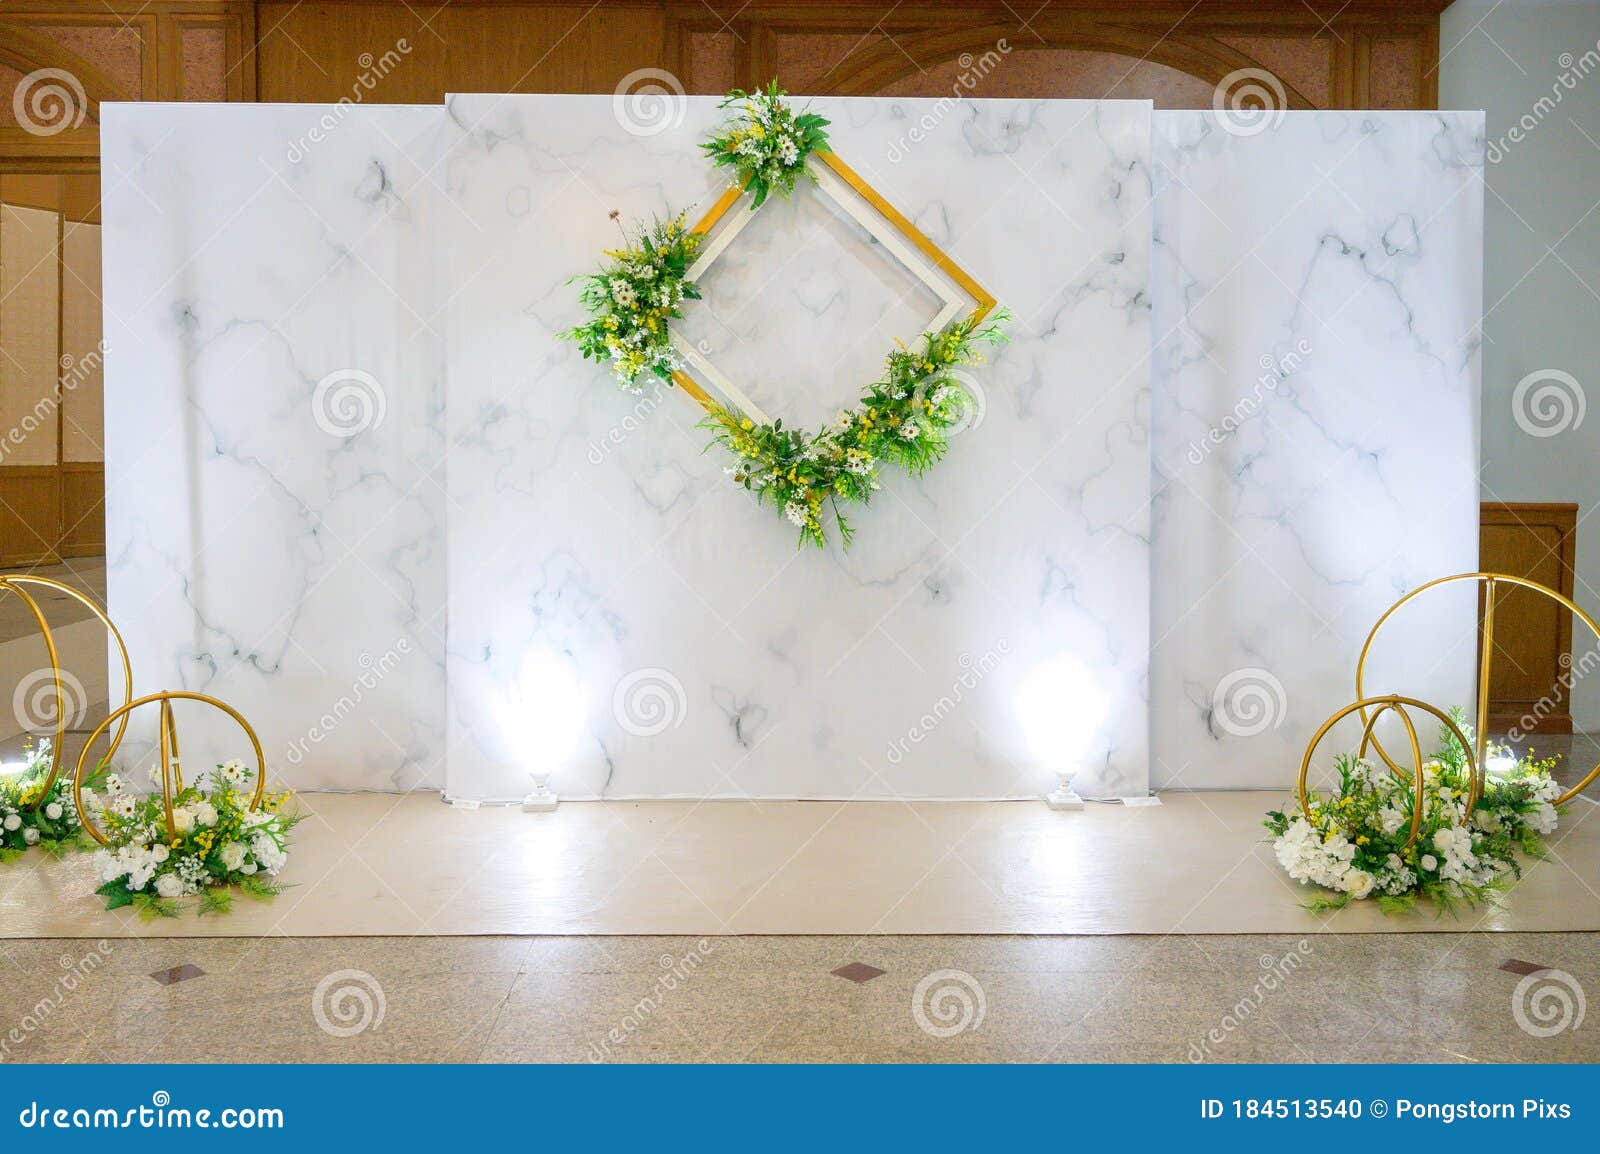 Wedding Flower Backdrop Indoor in the Hotel Stock Photo - Image of elegant,  background: 184513540